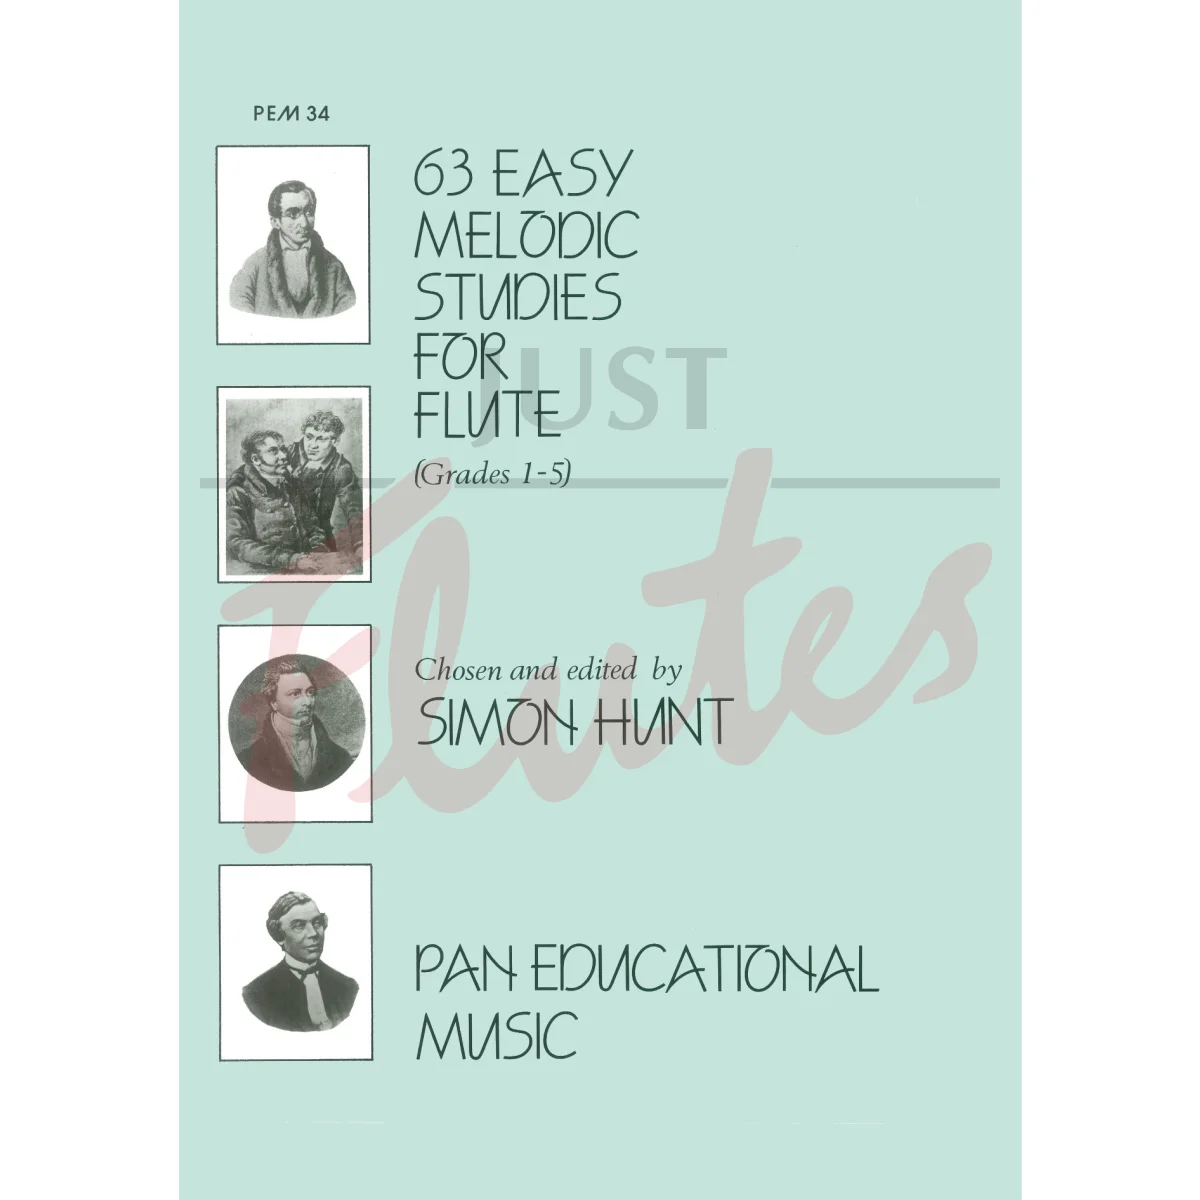 63 Easy Melodic Studies for Flute